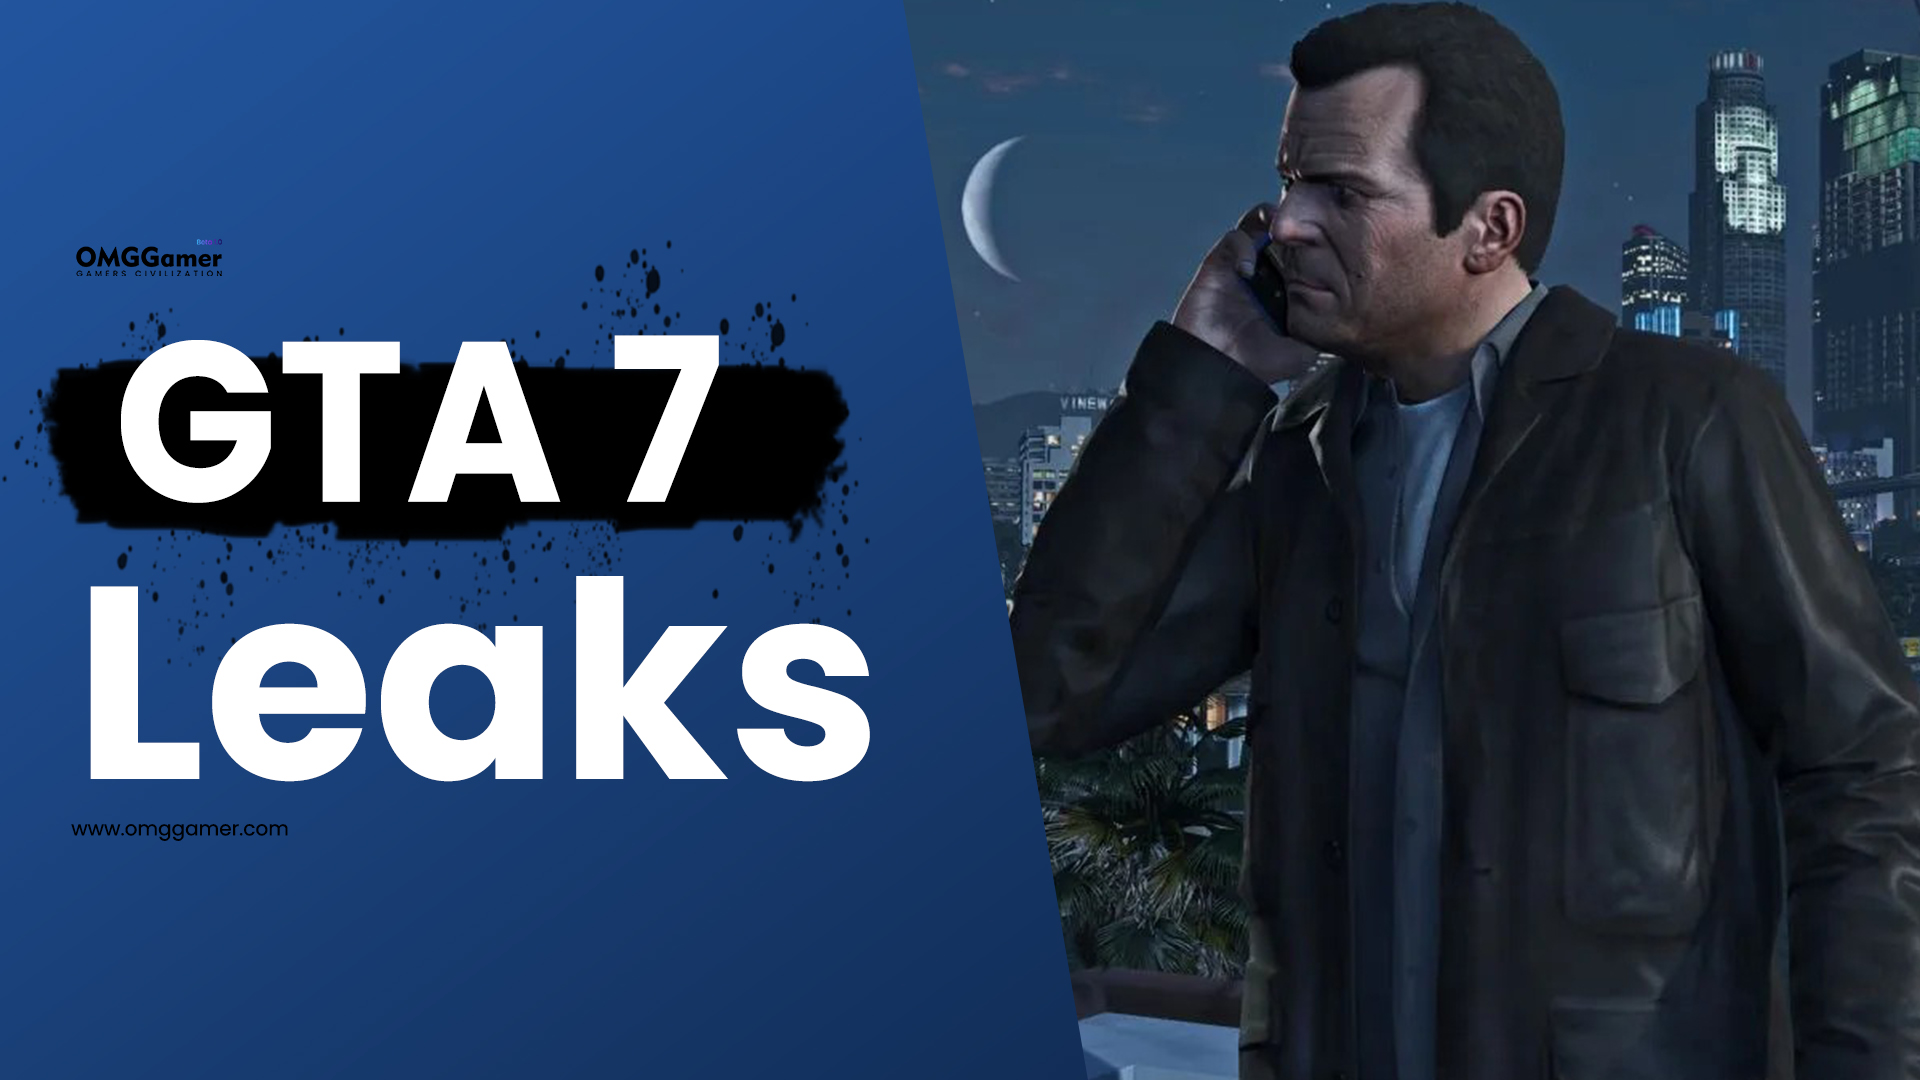 GTA 7 Leaks